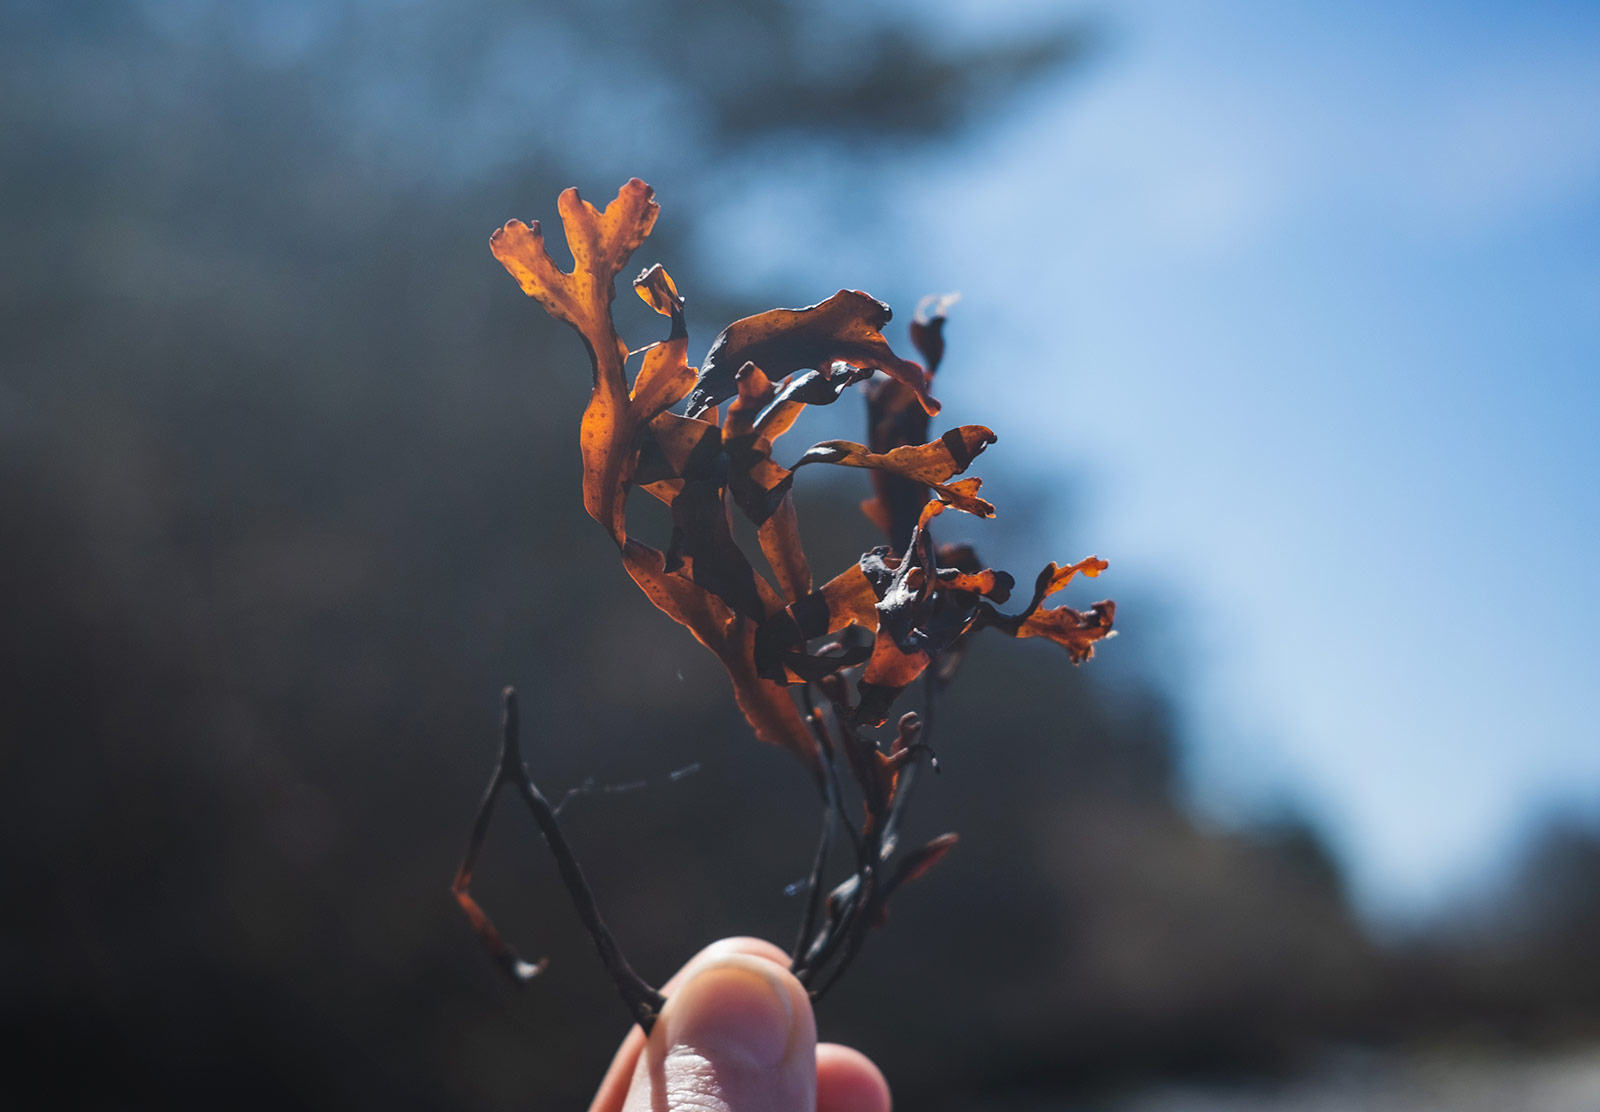 Sunlight on dried seaweed